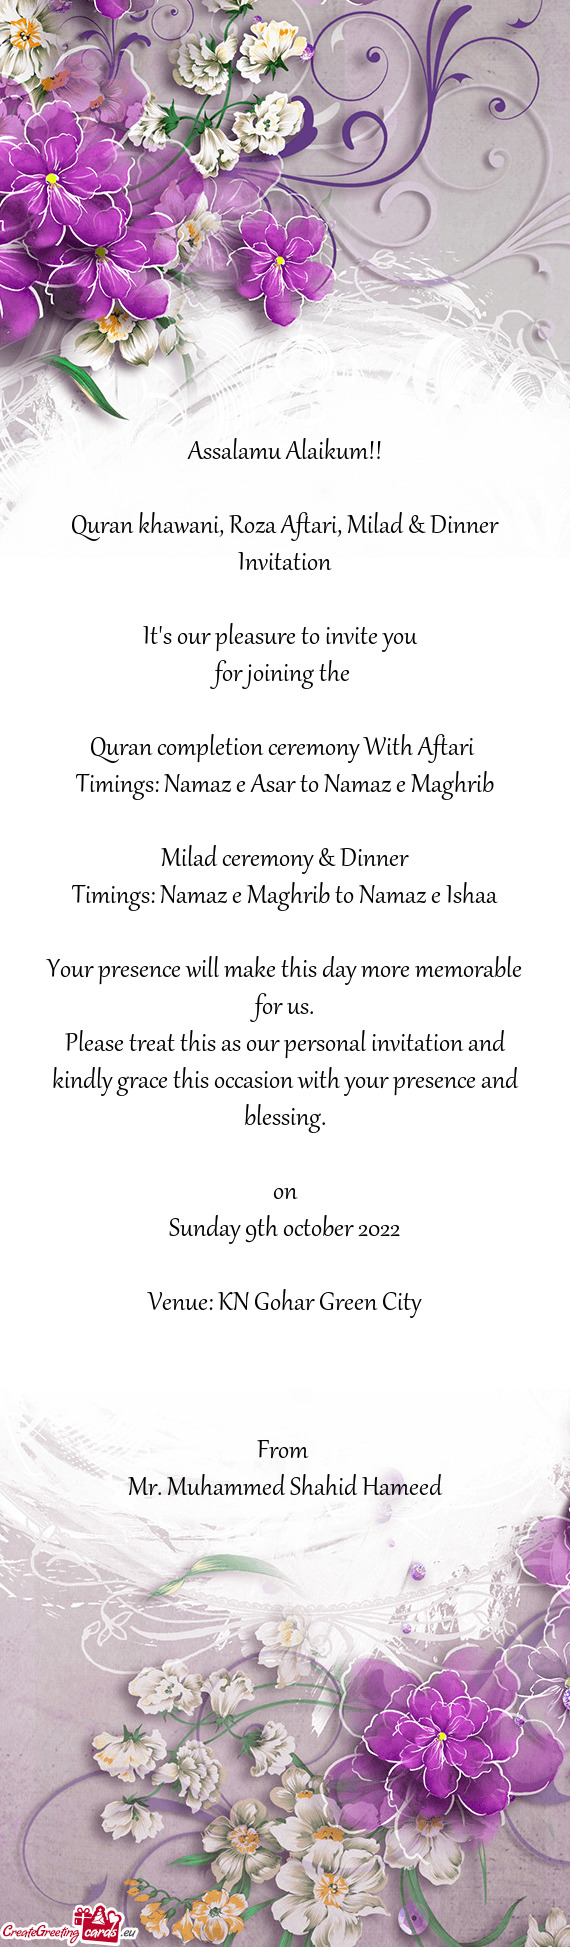 Quran khawani, Roza Aftari, Milad & Dinner Invitation